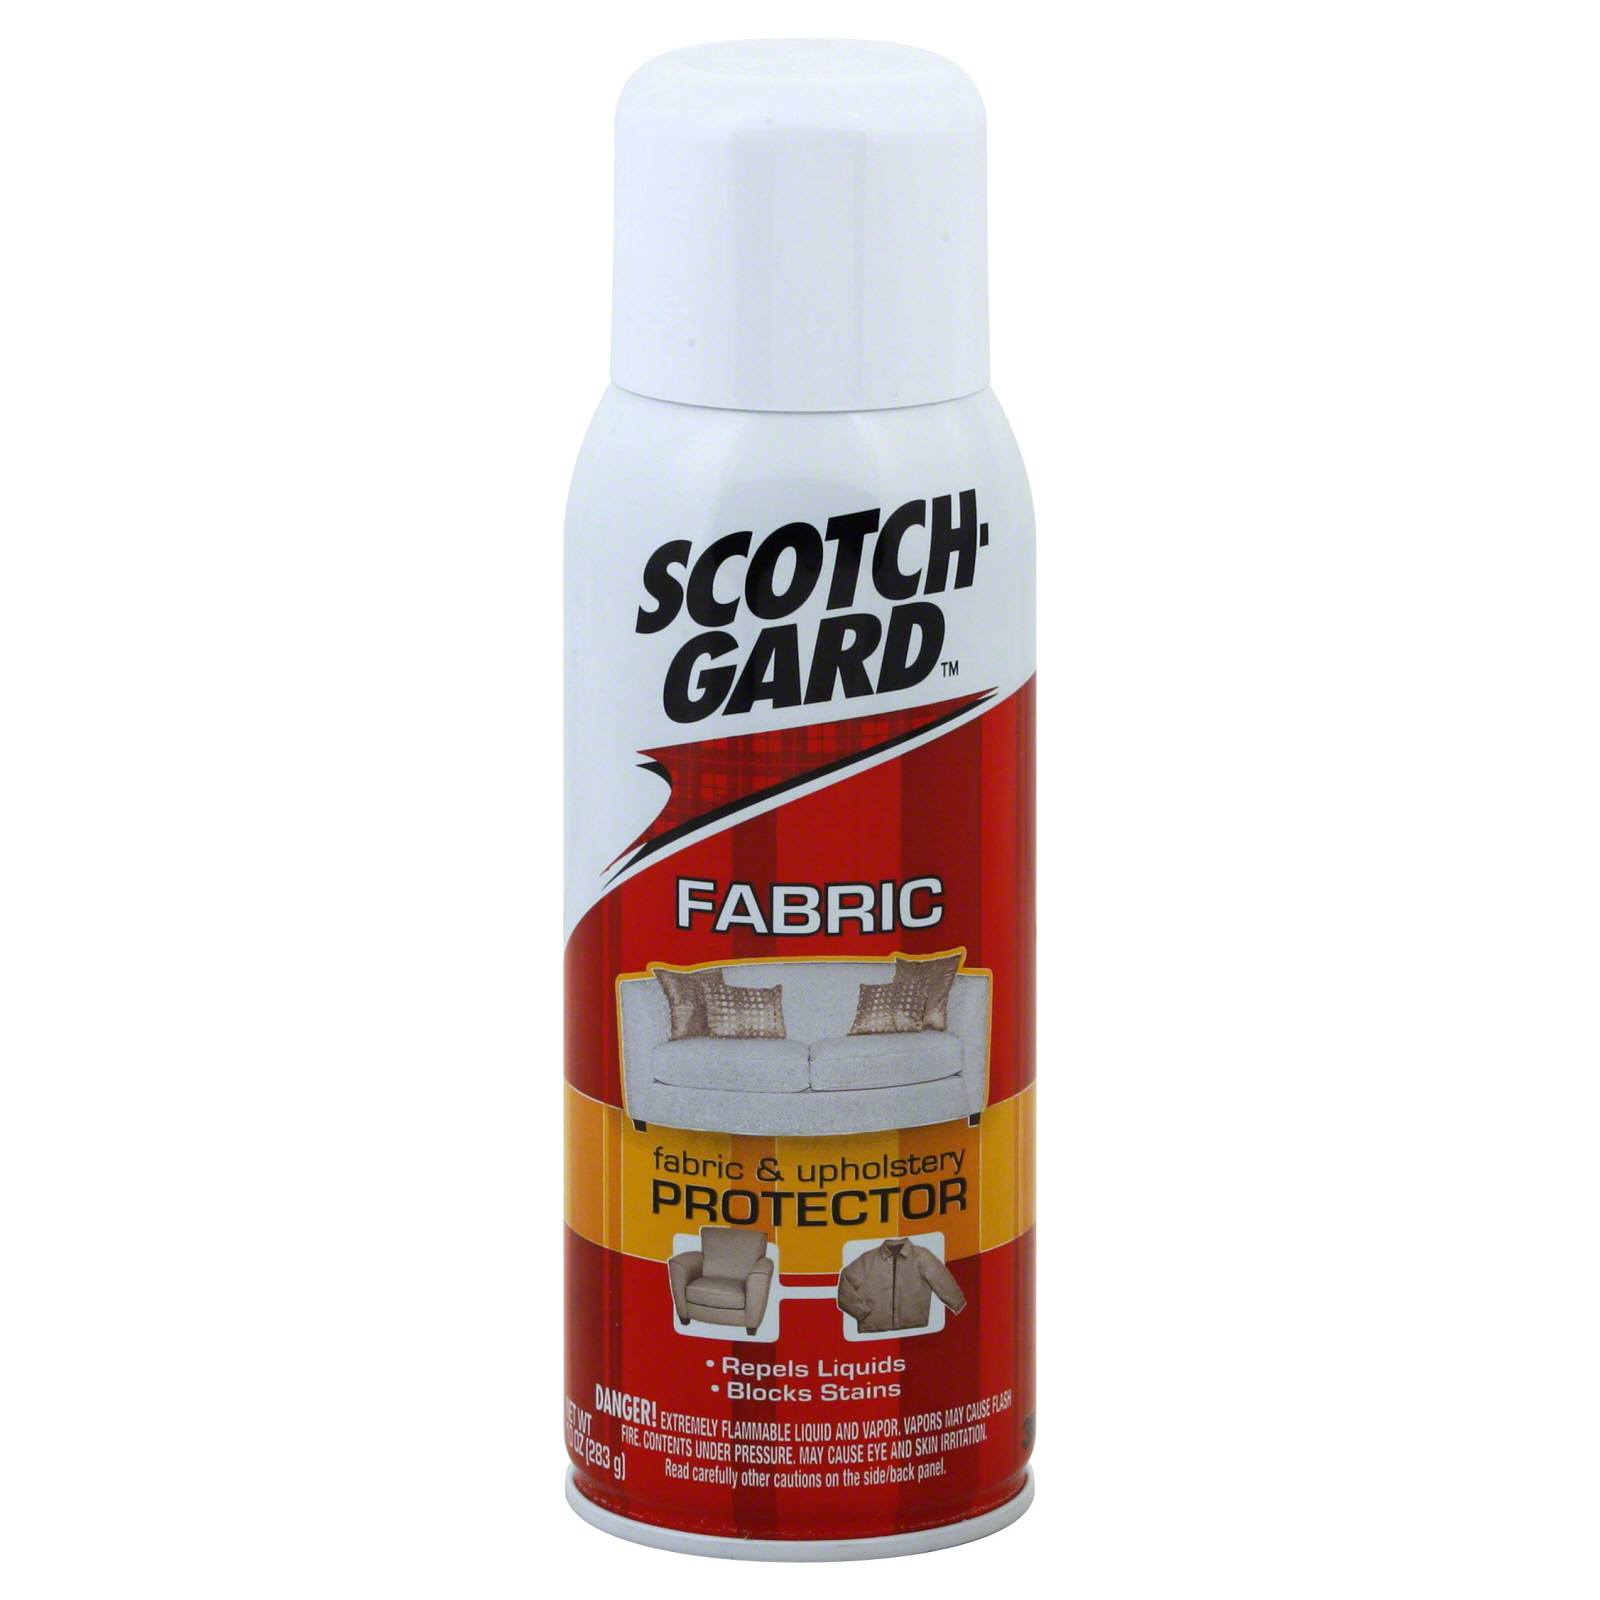 Scotchgard Scotch Guard Fabric Protector, 10 oz (283 g)